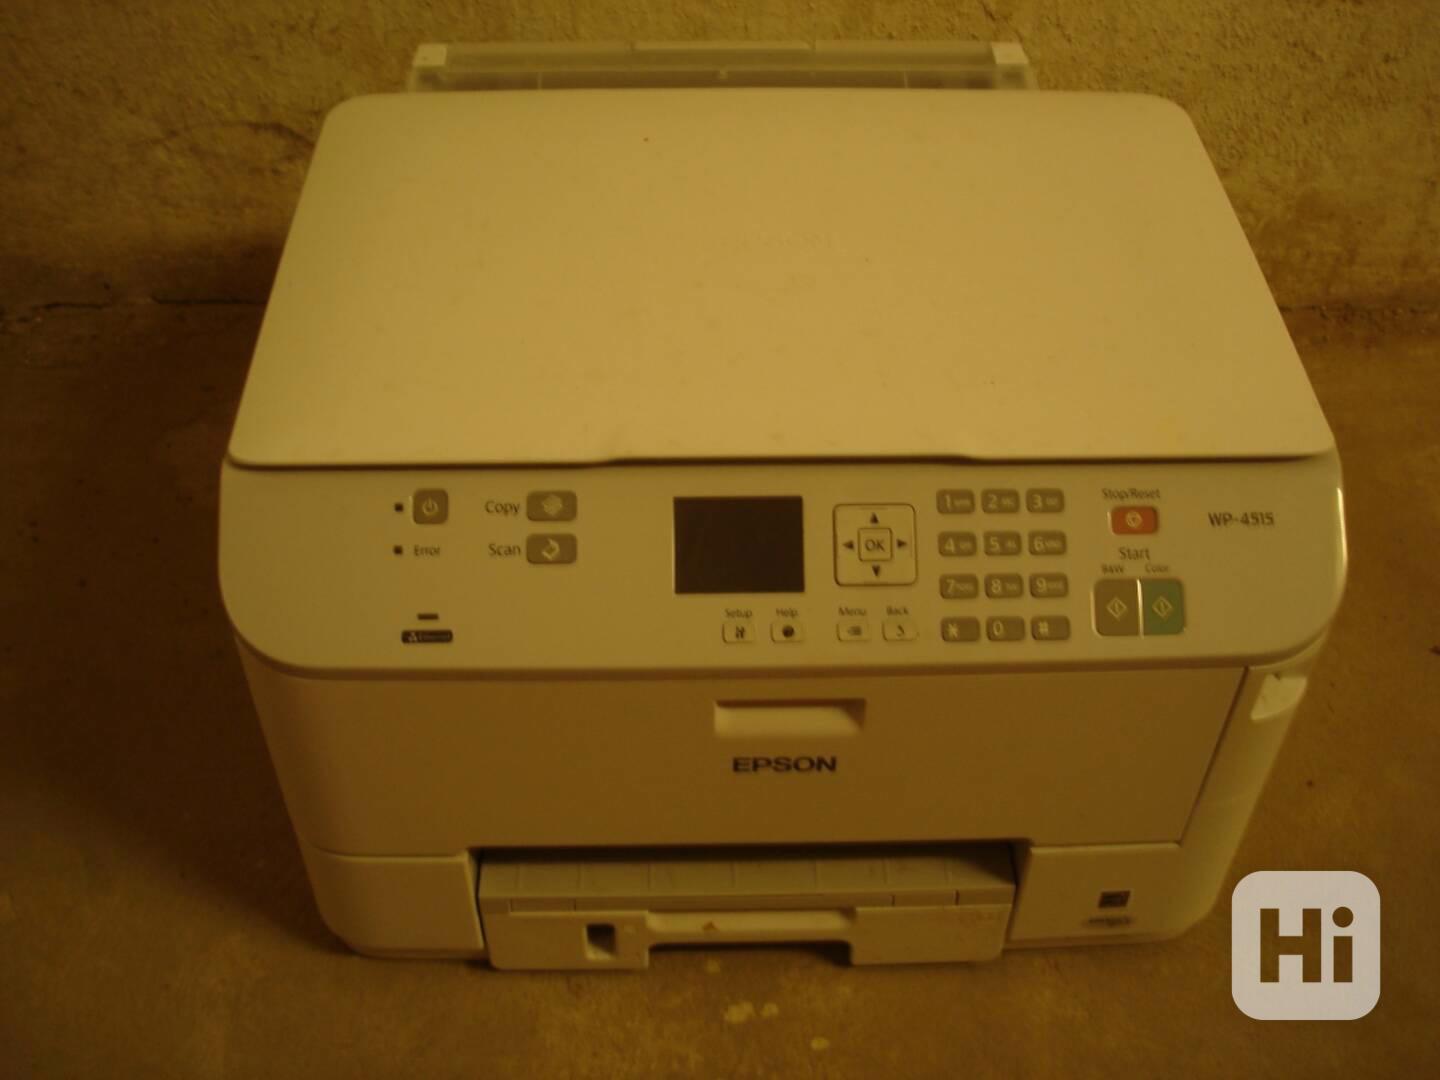 Tiskárna Epson WP-4515, Toner laserová tiskárna HP, Xerox - foto 1